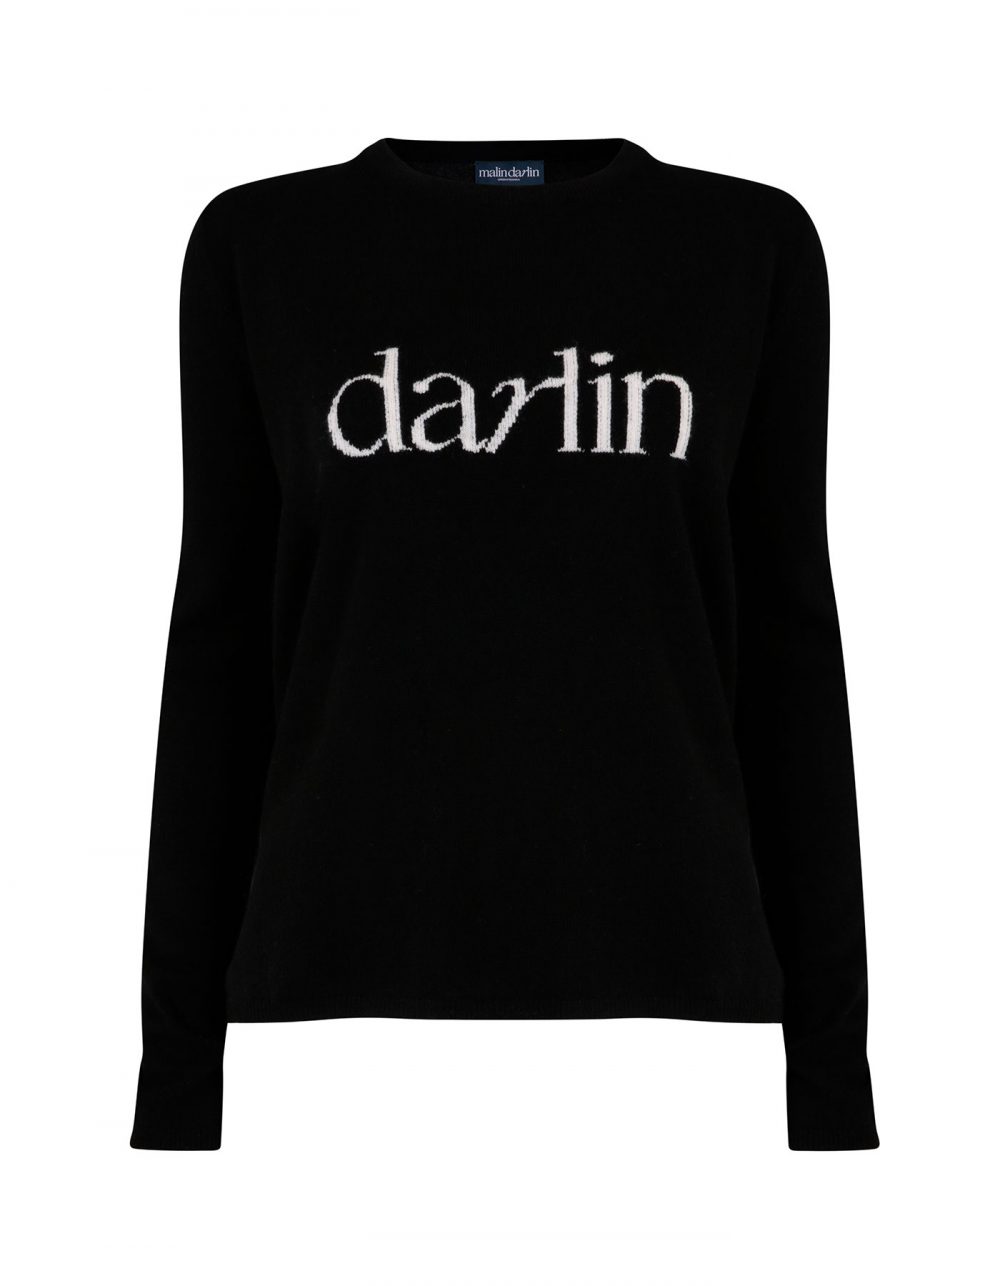 The malin darlin Darlin black cashmere jumper pictured against a white background.